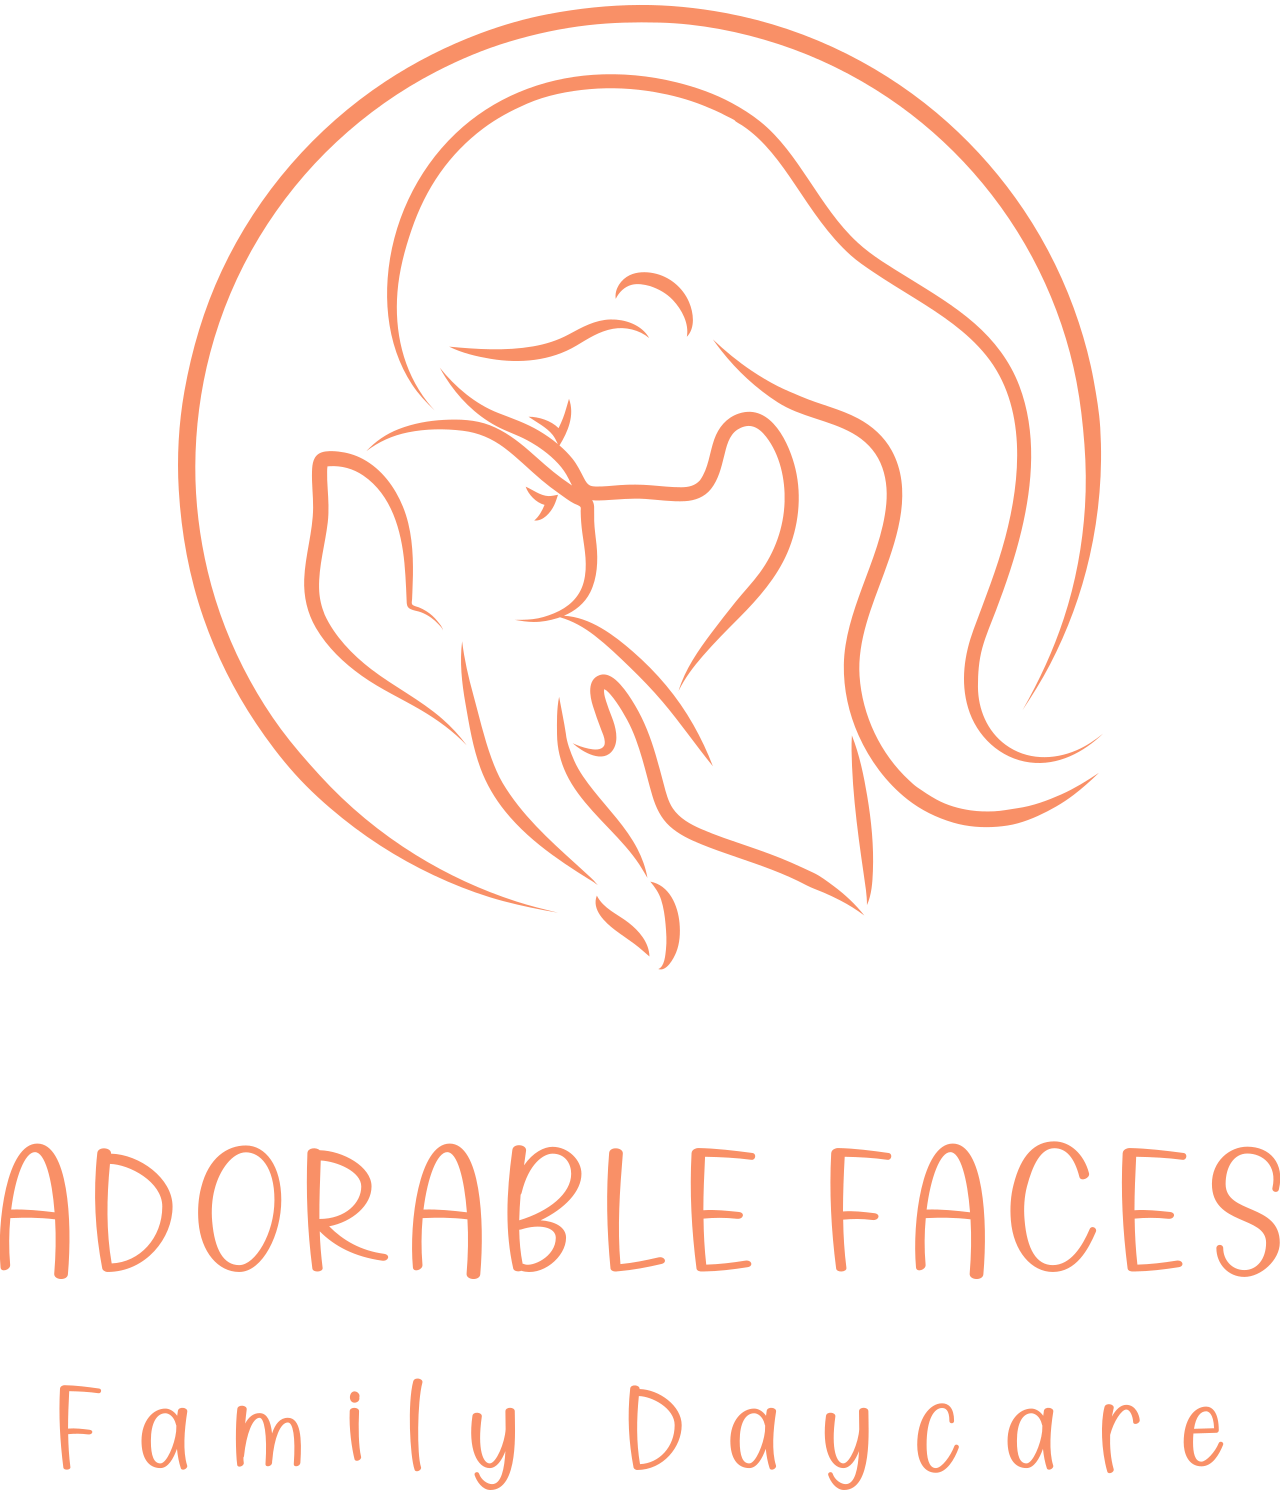 ADORABLE FACES's web page